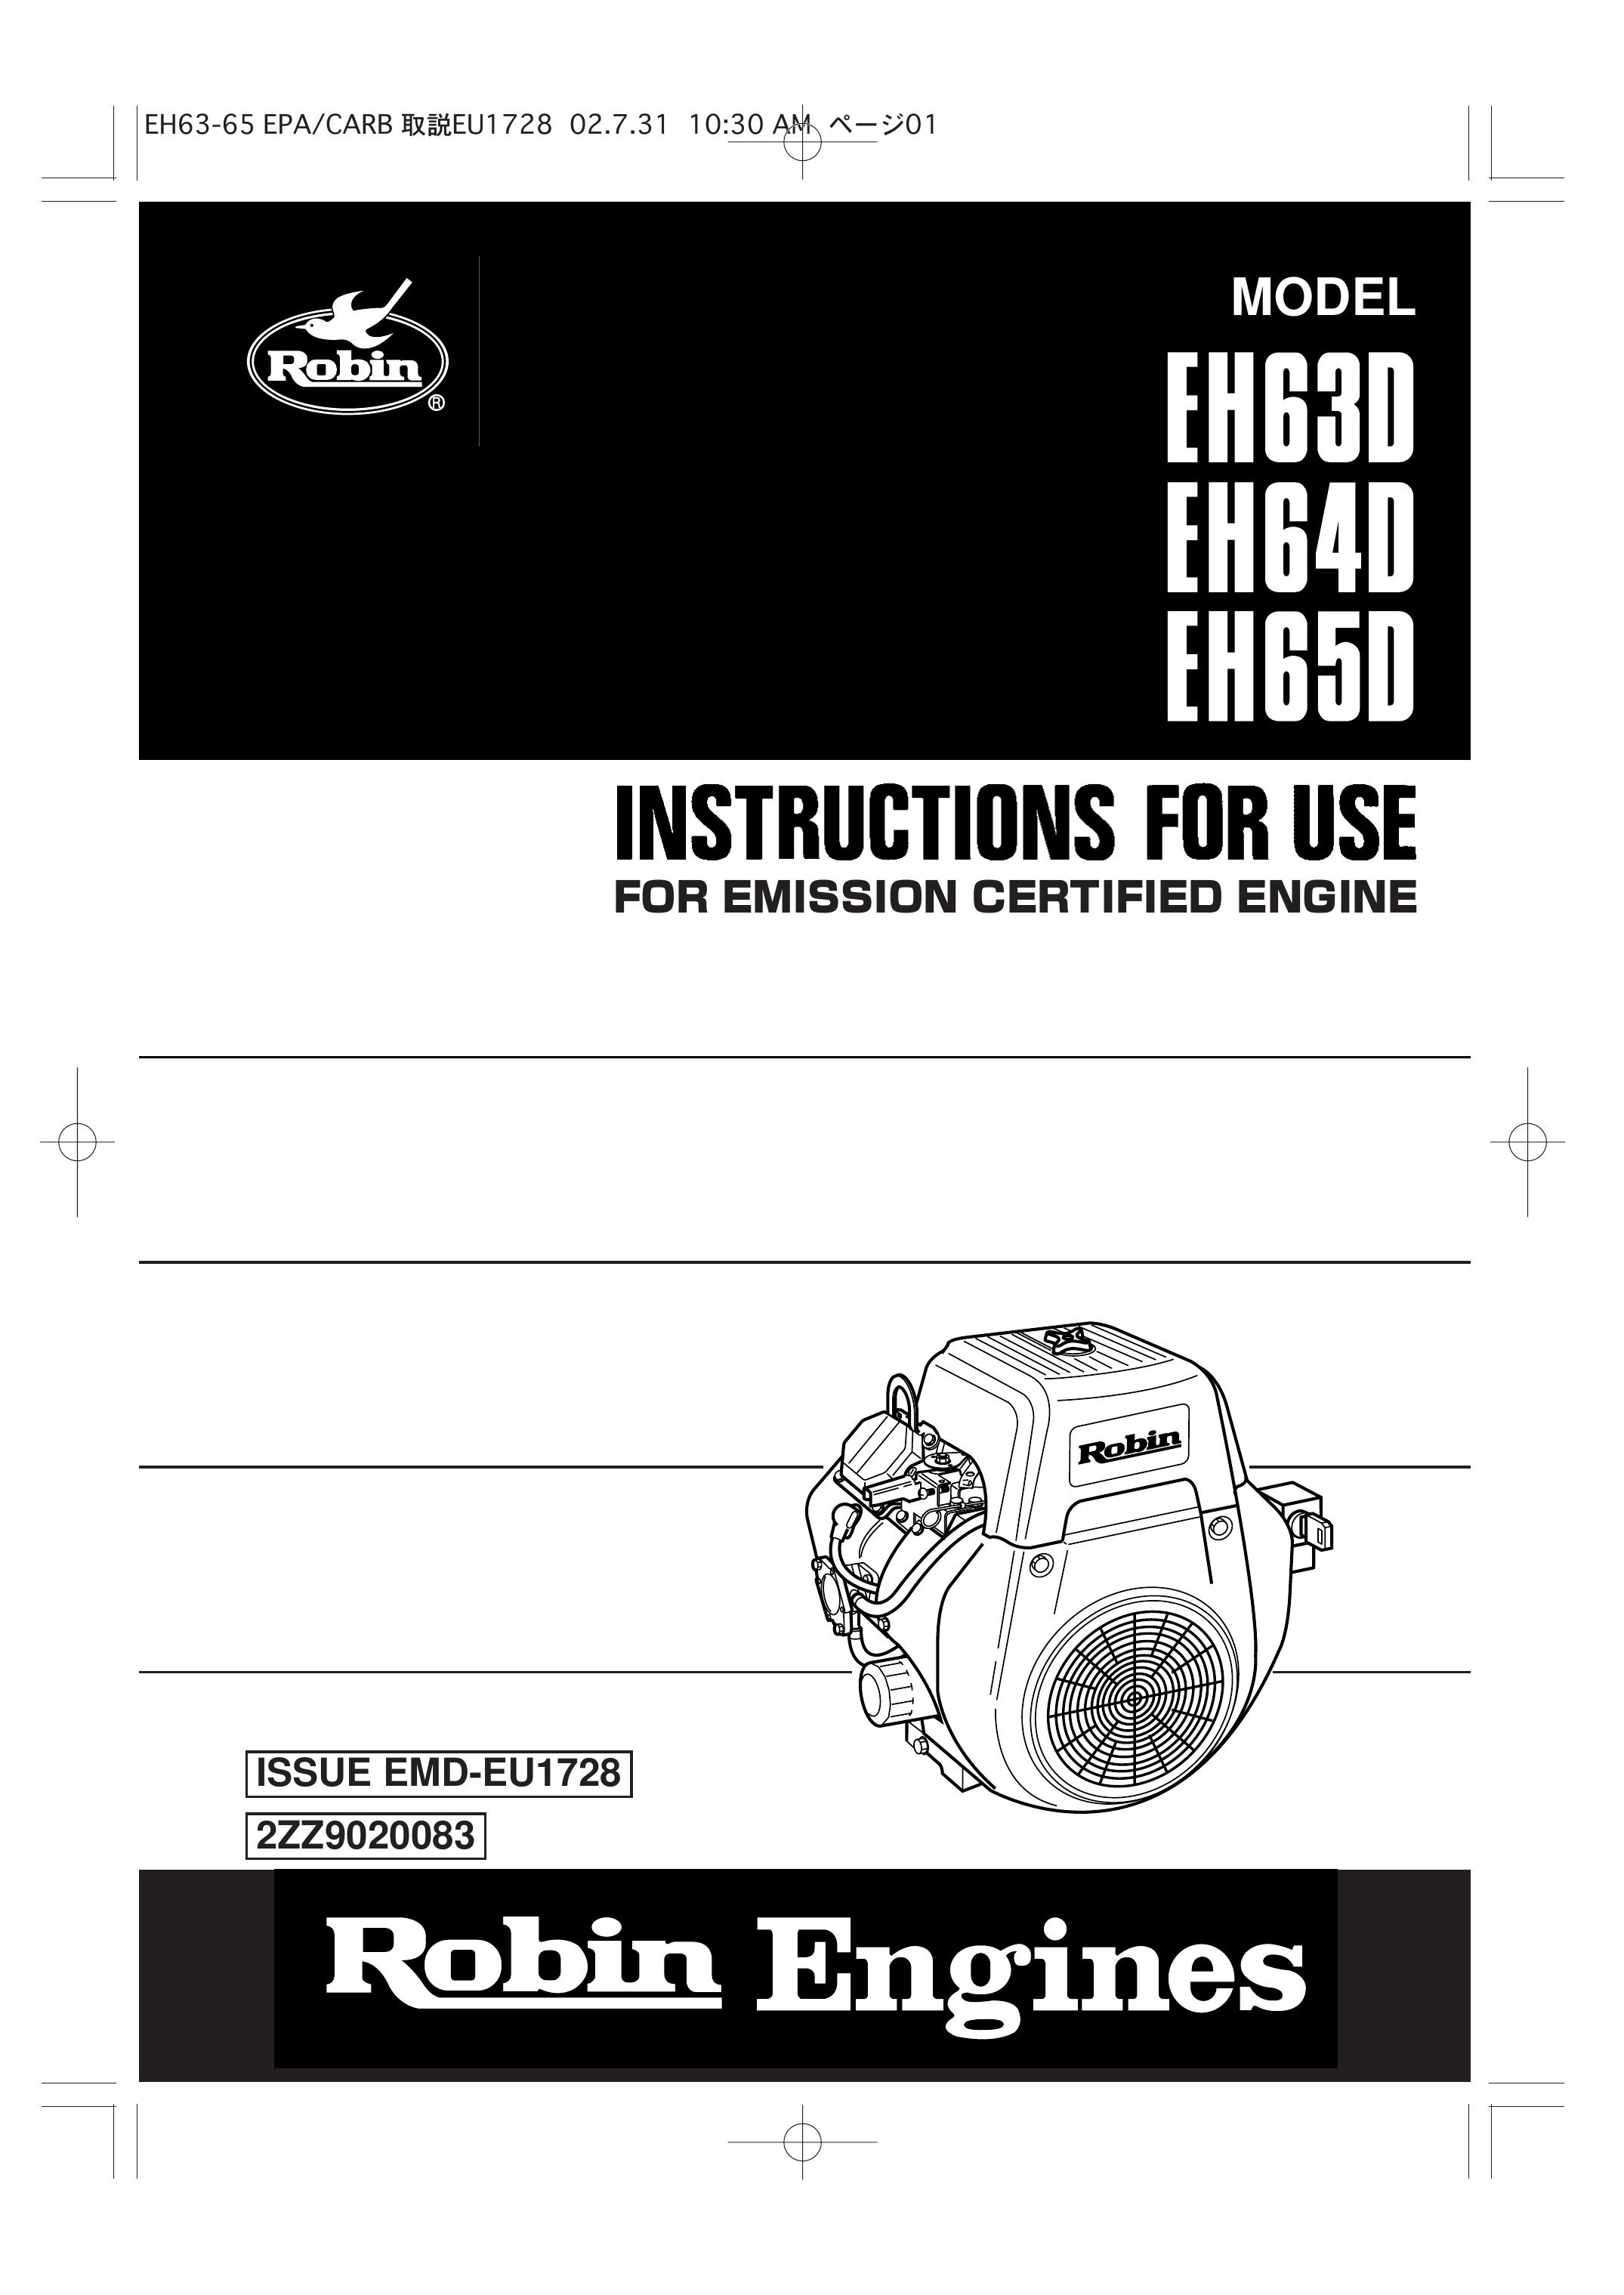 Subaru Robin Power Products EH65D Portable Generator User Manual